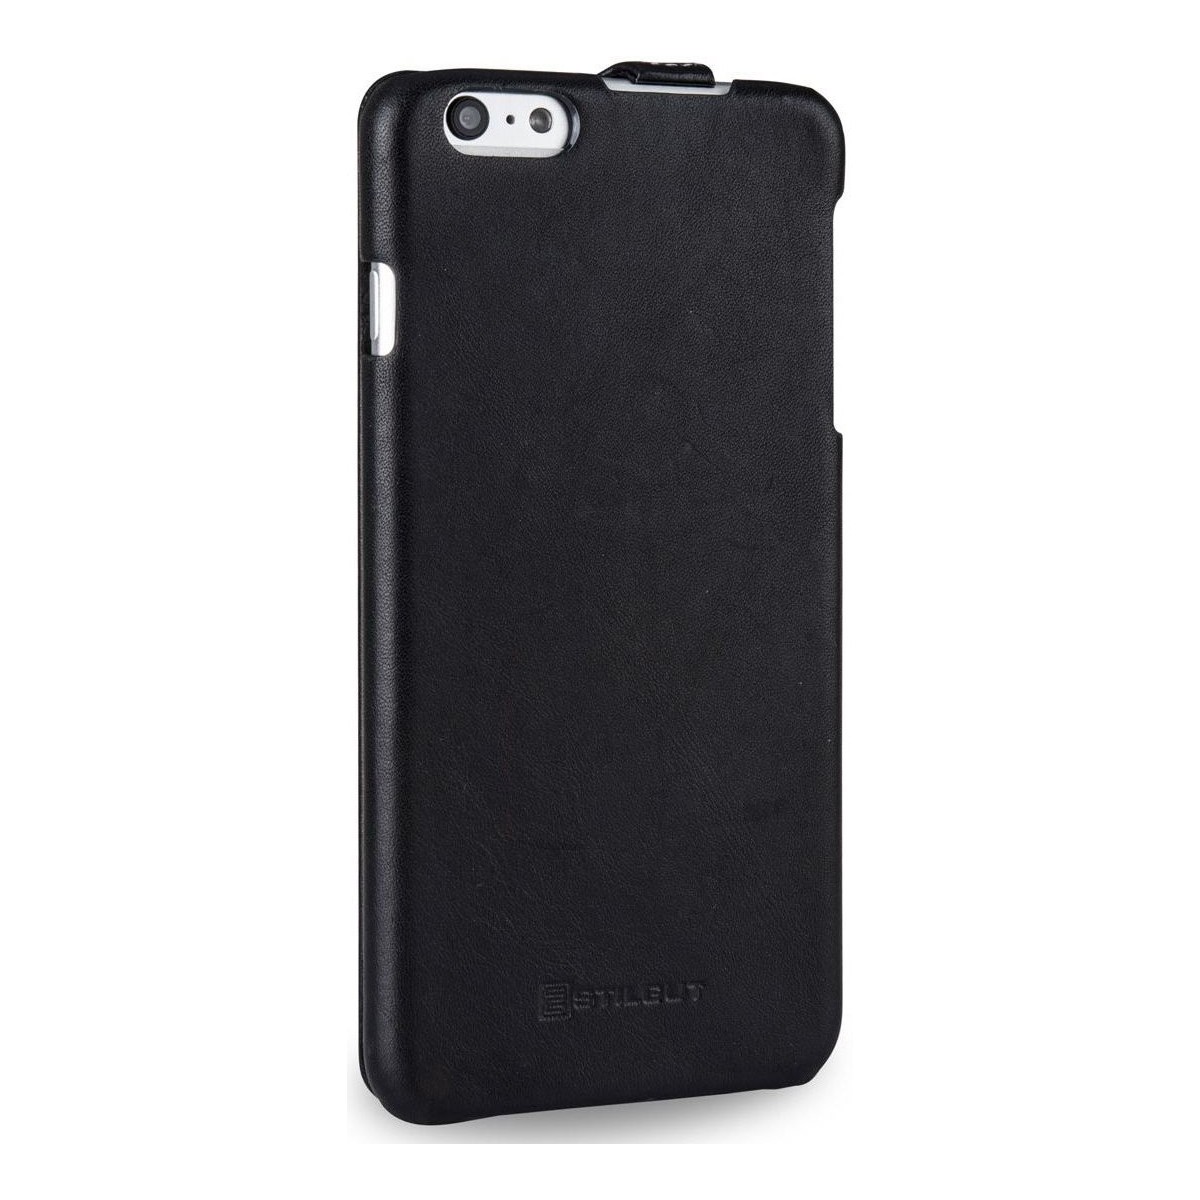 Etui iPhone 6 Plus/ 6s Plus ultraslim en cuir véritable noir nappa - Stilgut